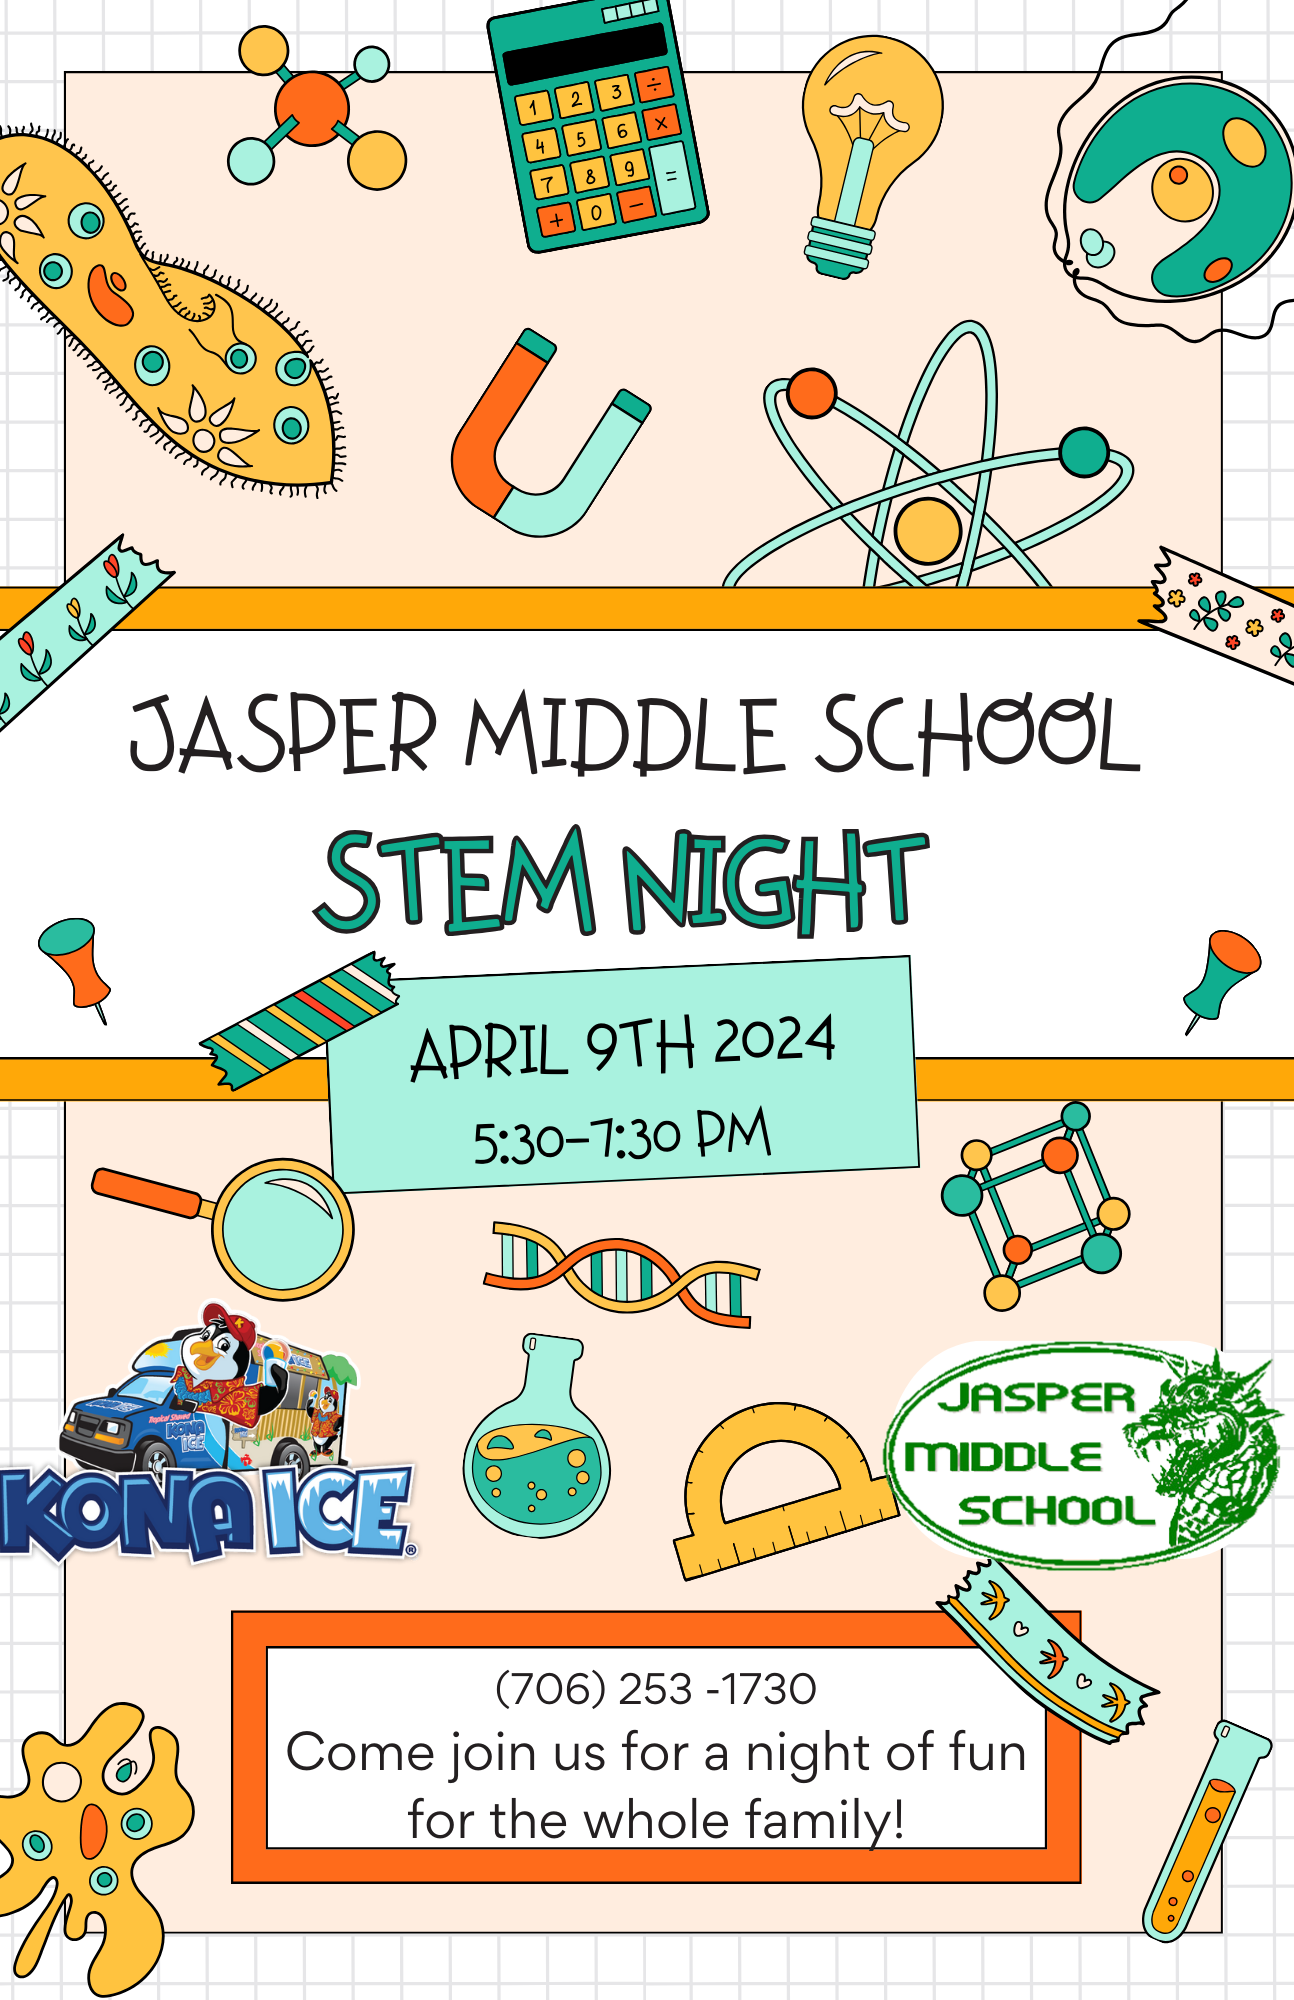 Jasper Middle School STEM Night